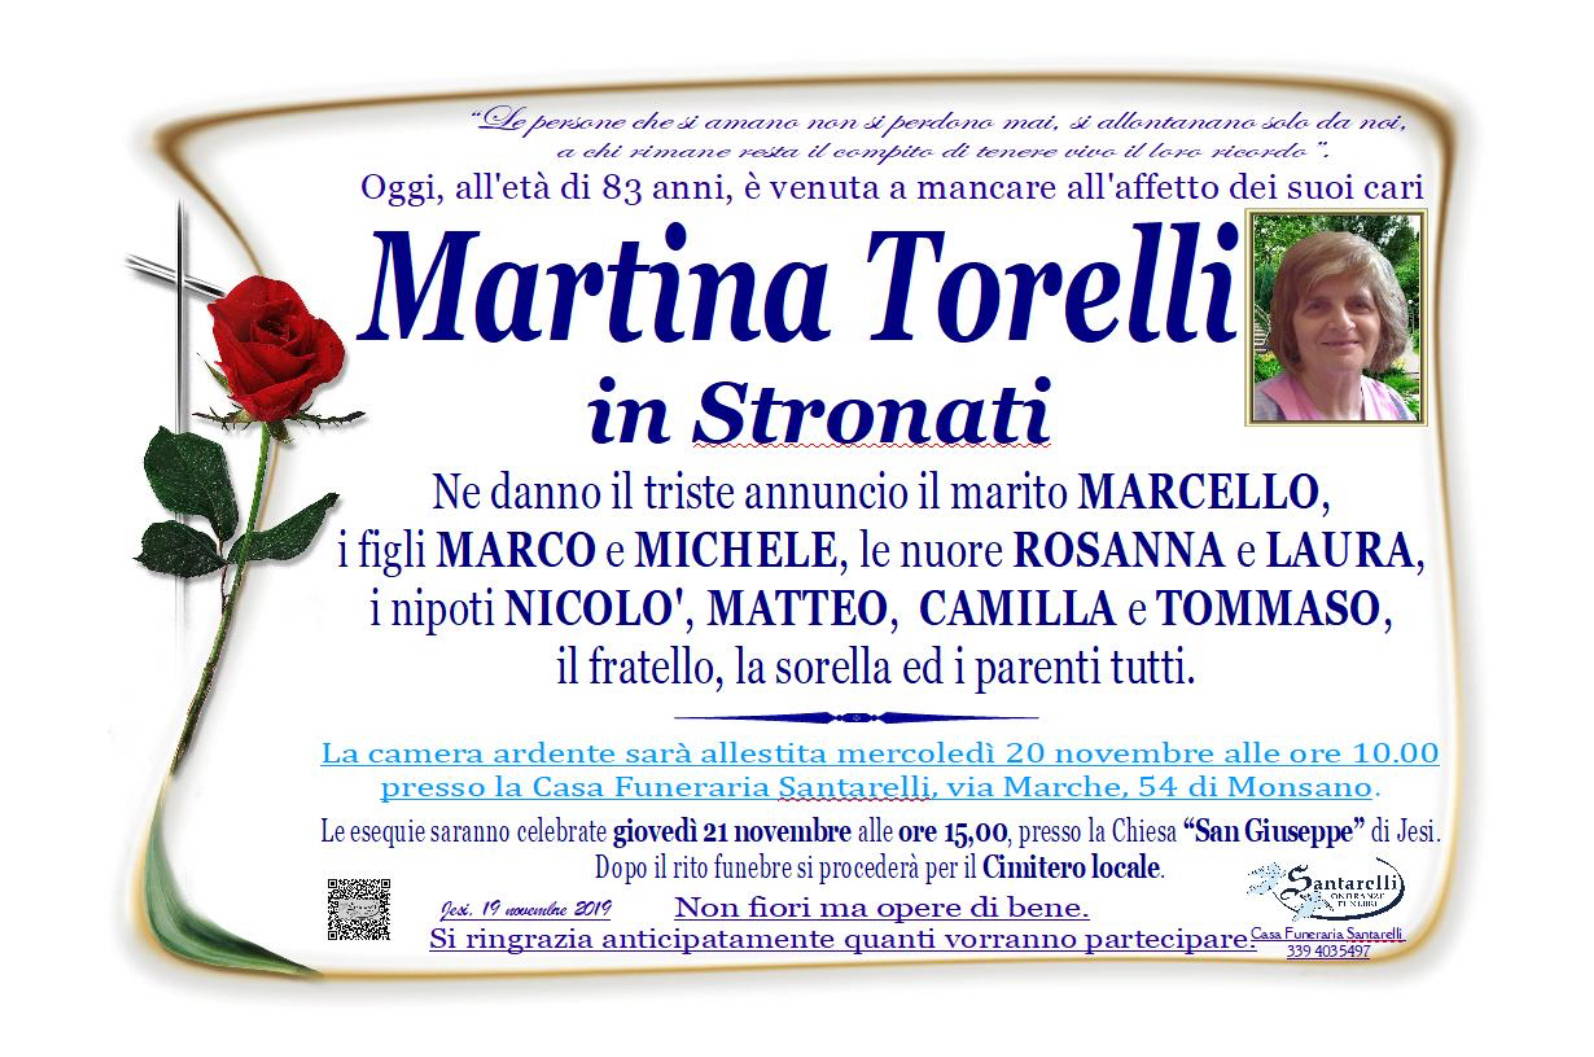 Martina Torelli